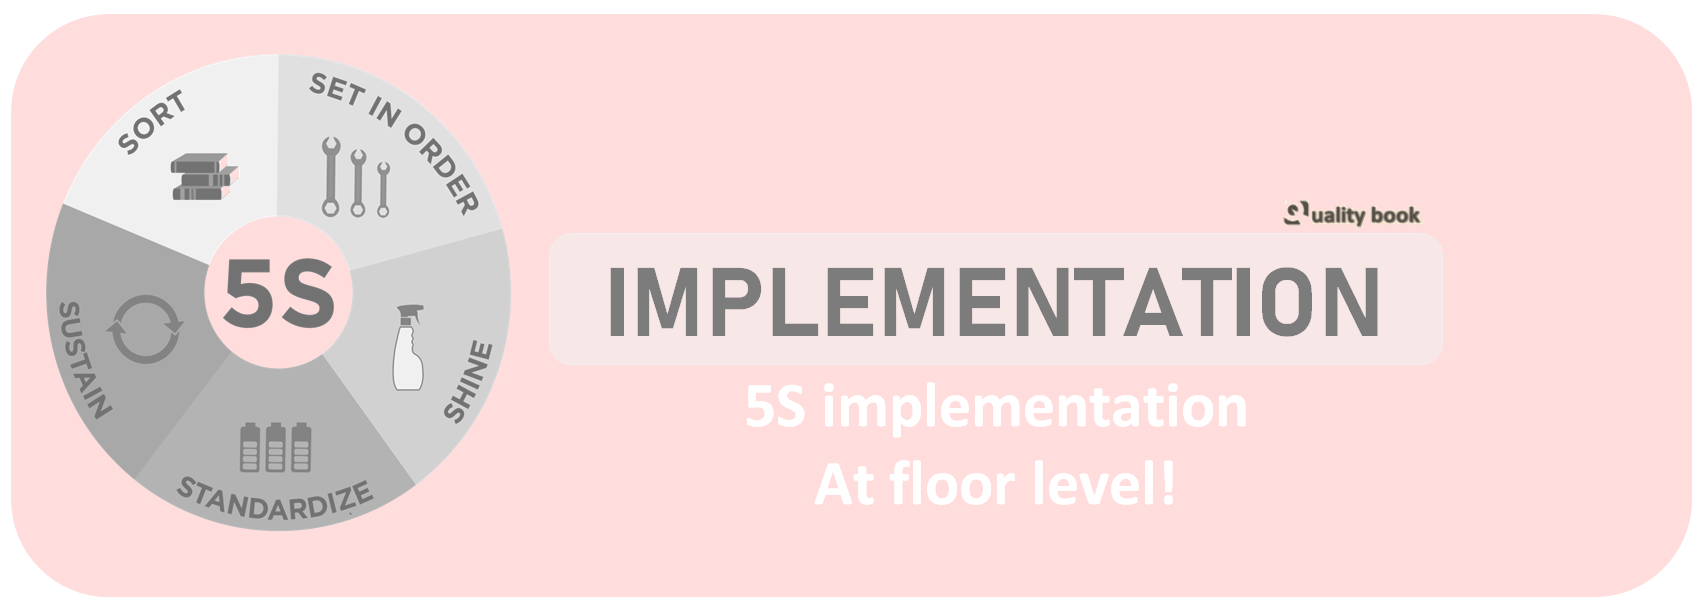 5s implementation